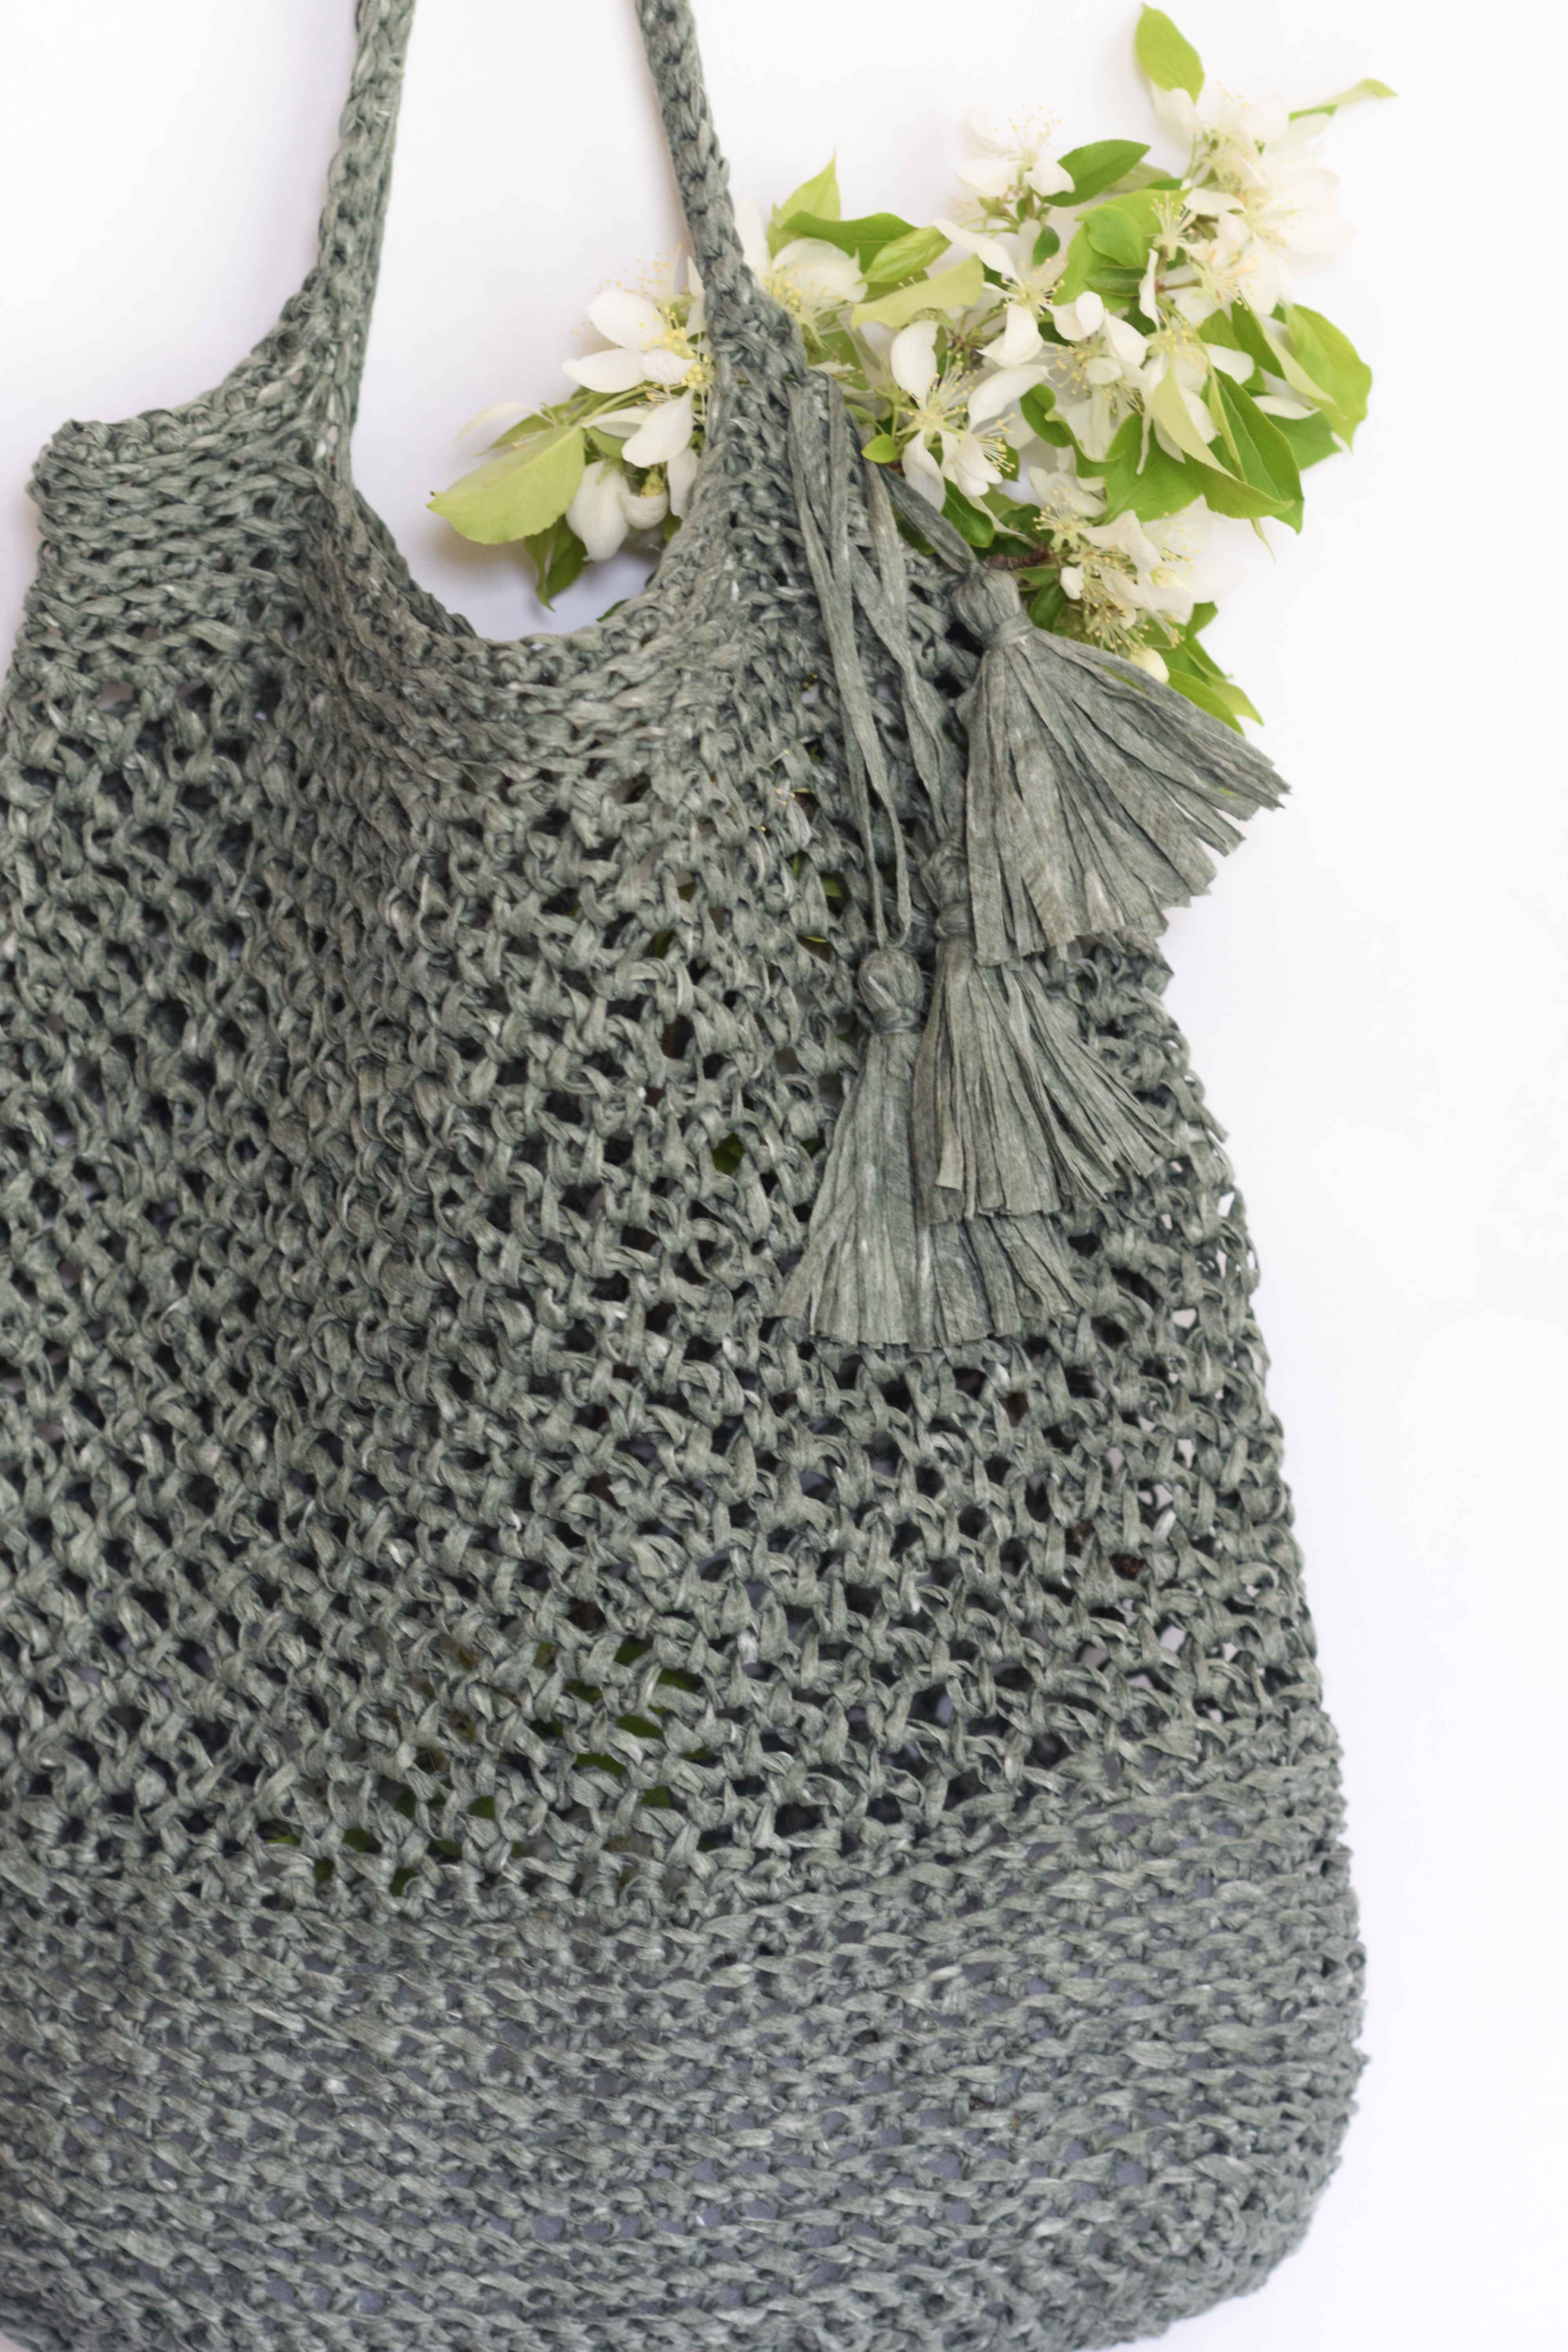 Crocheted Market Bag Pattern Palmetto